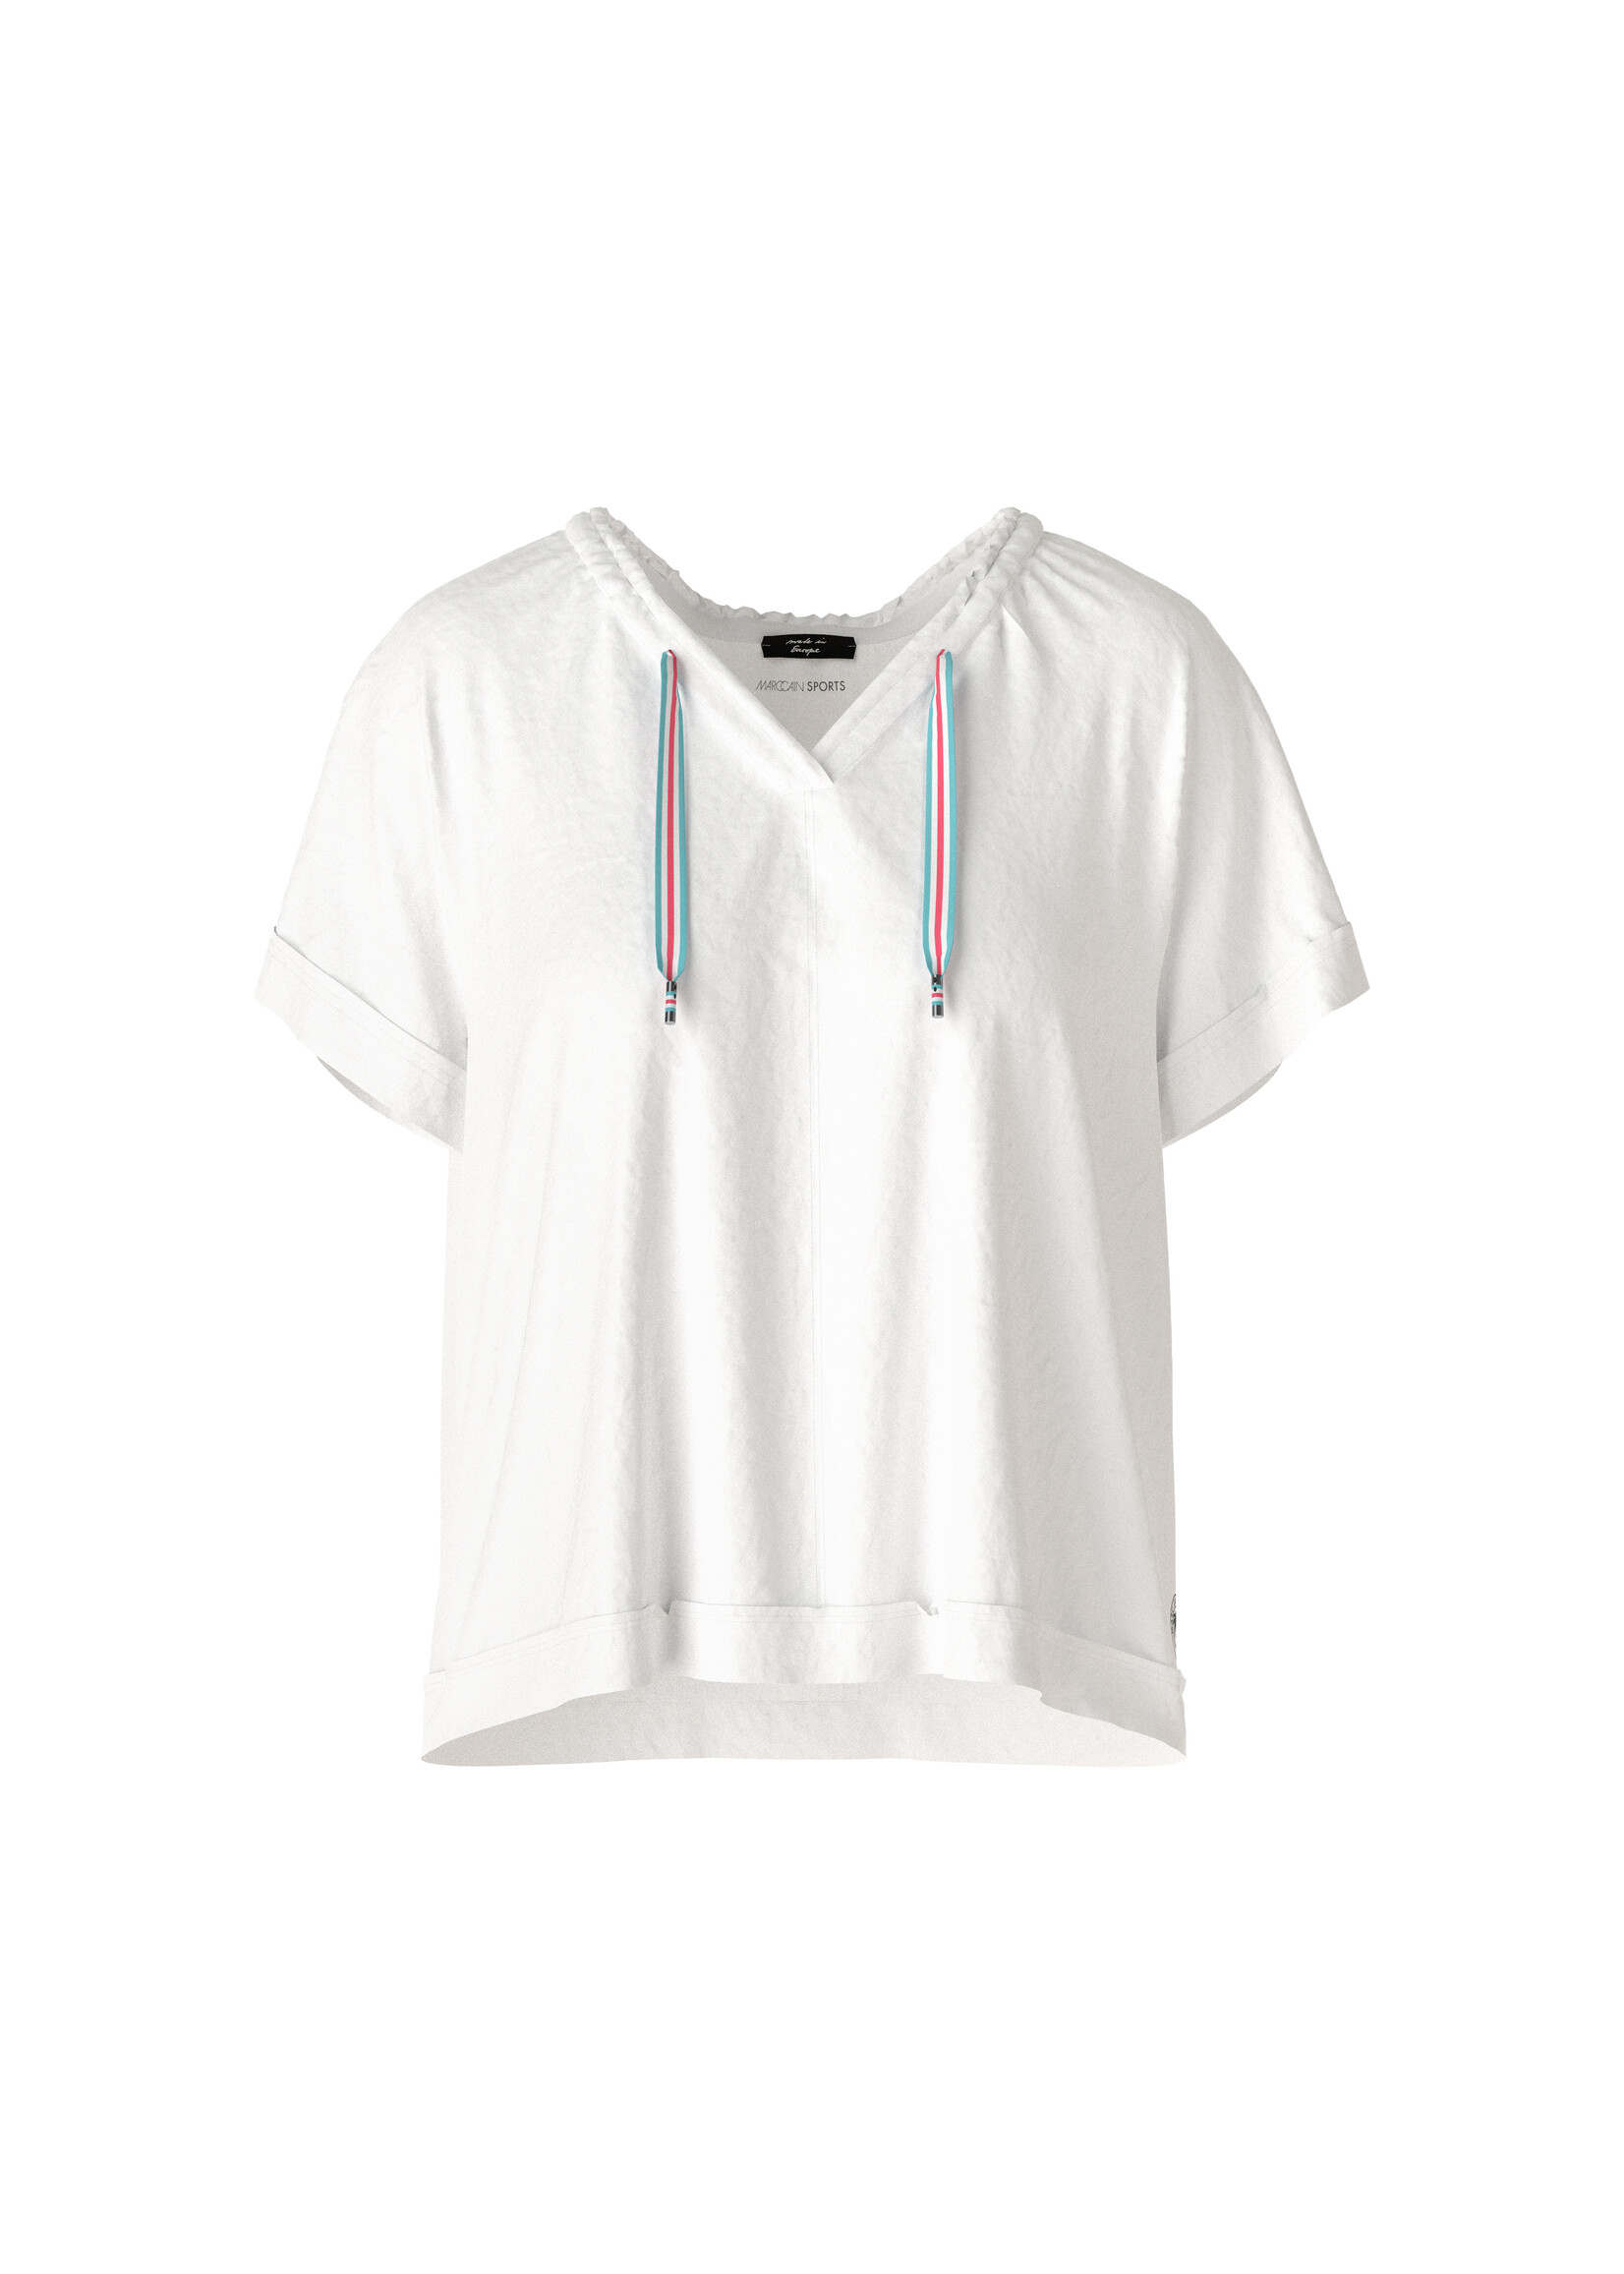 Marccain Sports blouse  WS 55.07 J67 100